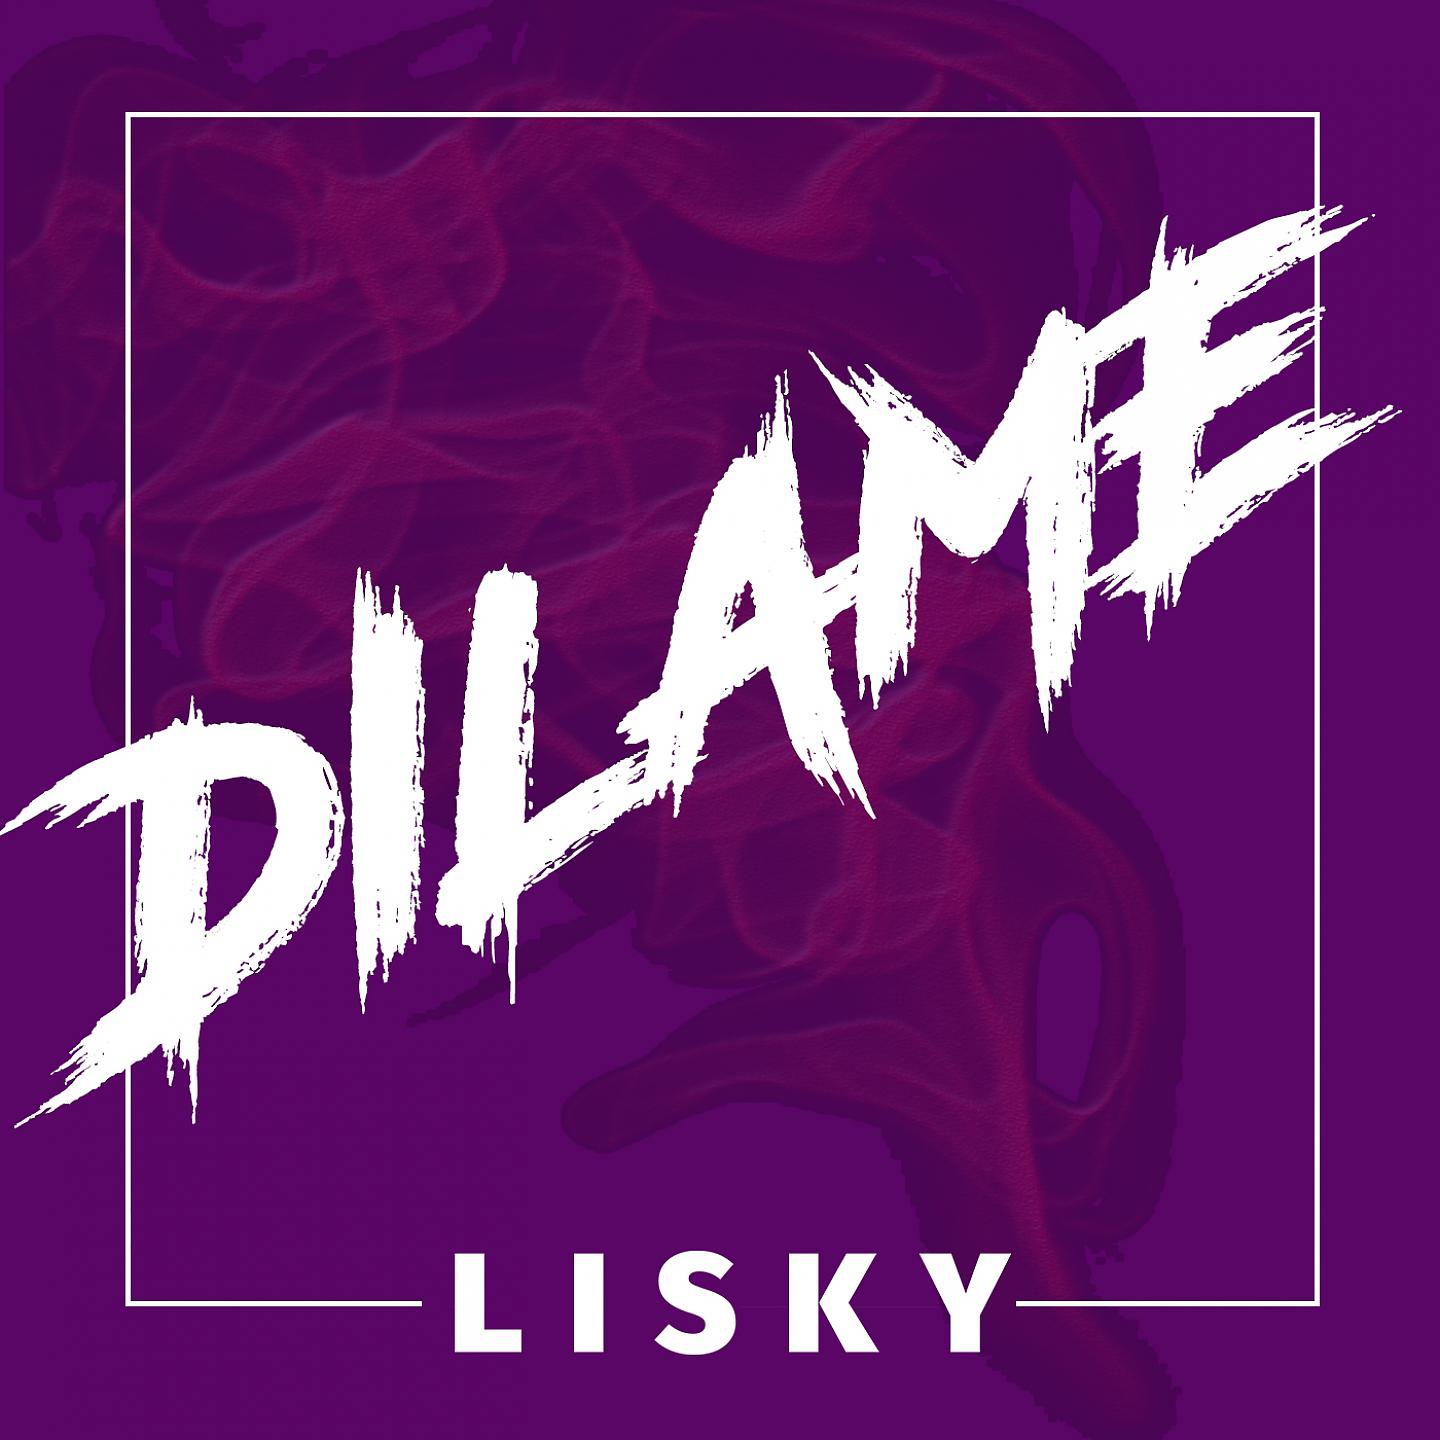 Постер альбома Dilame